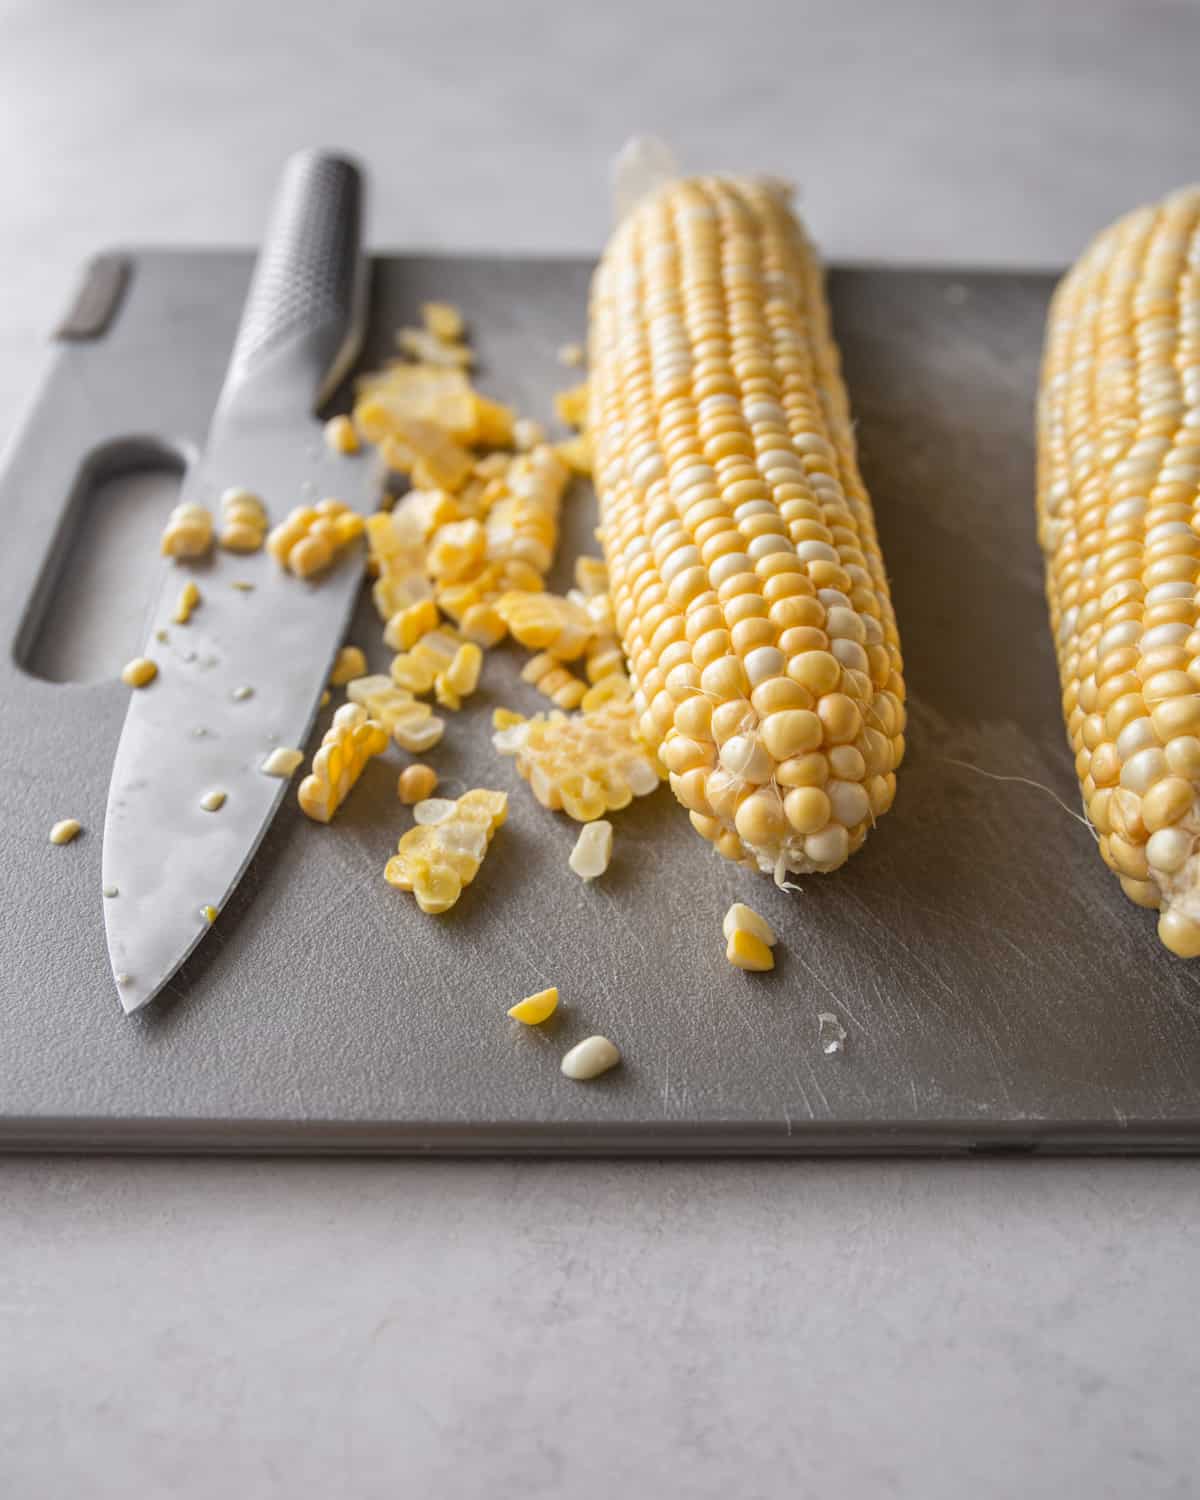 cutting corn kernels off the cob